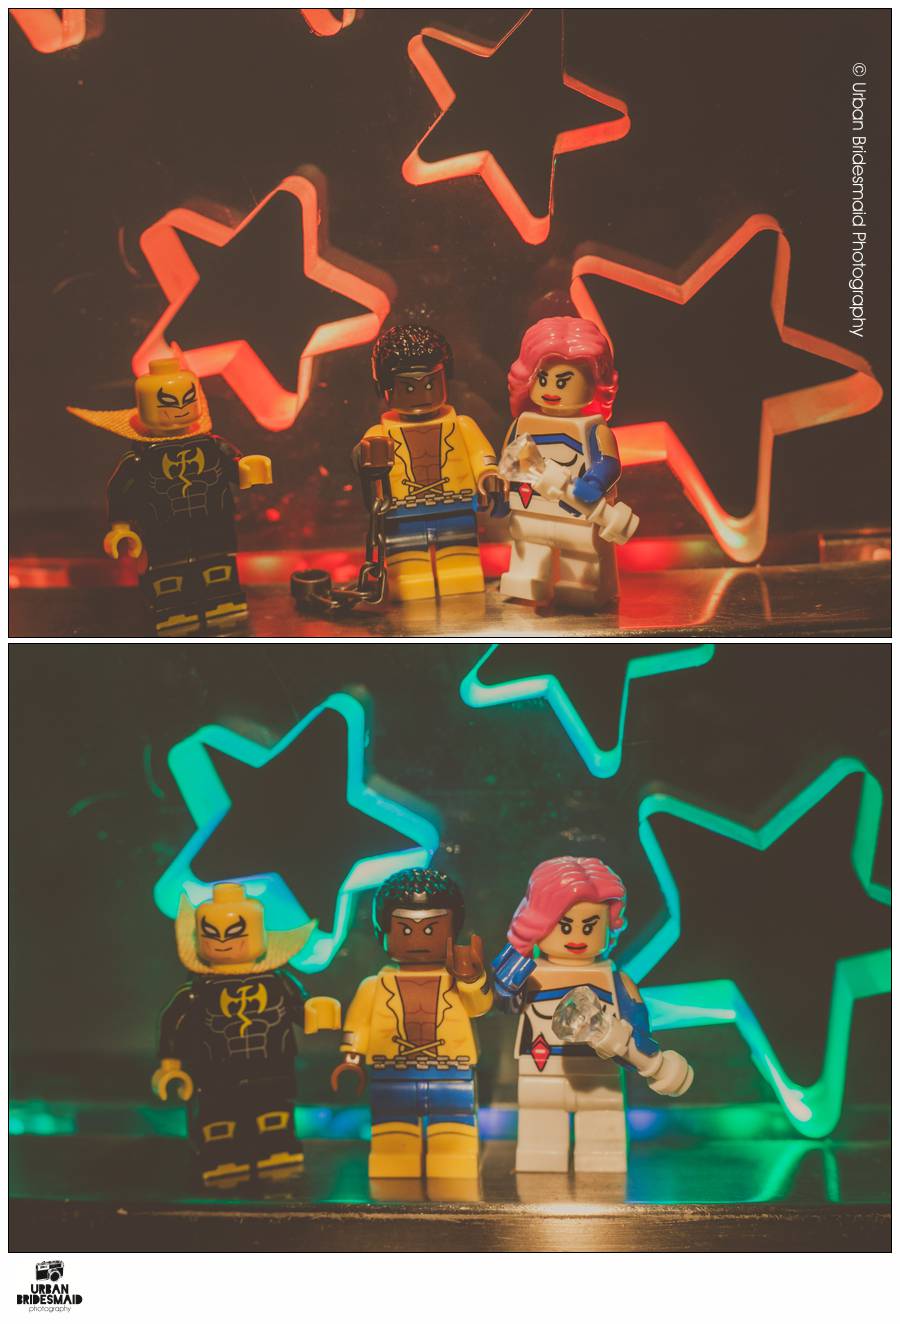 21-Lego-Minifig-Jessica-Jones-Luke-Cage-wedding-London-Urban-Bridesmaid-Photography Superhero Destination Wedding with Lego figures and minifigs